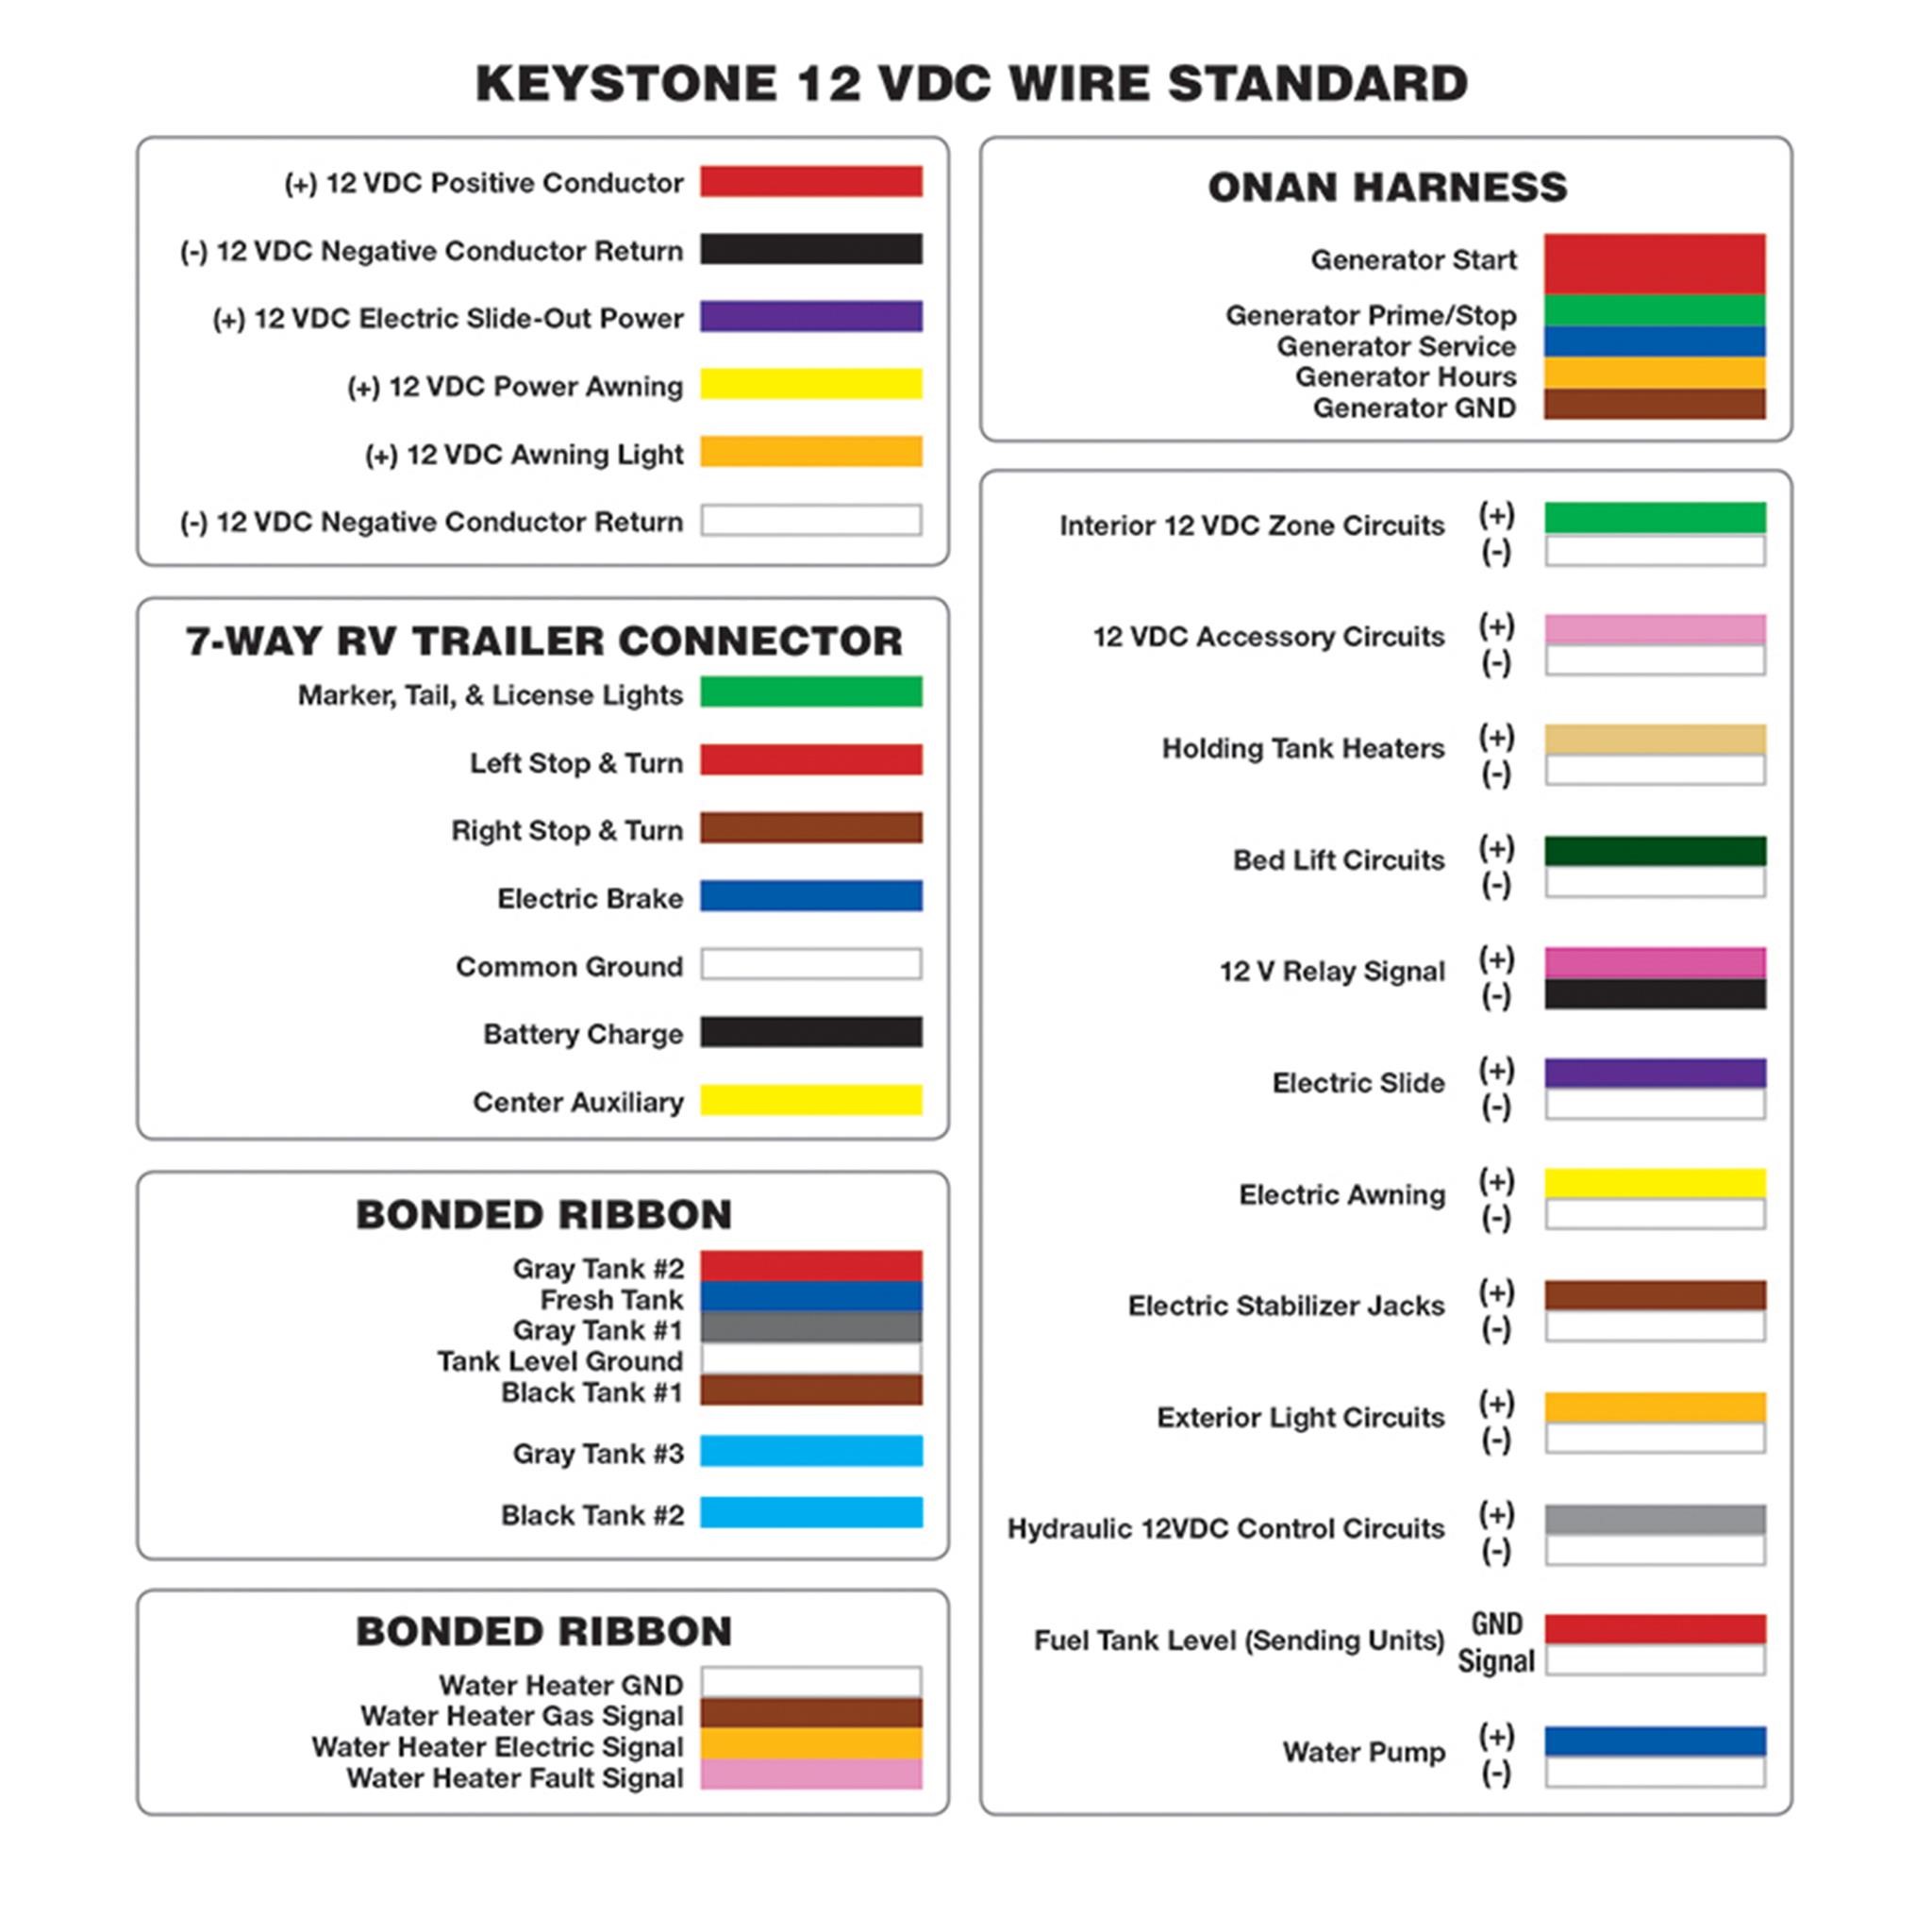 Keystone Rvs Unified Wiring Standard Speeds Up Troubleshooting